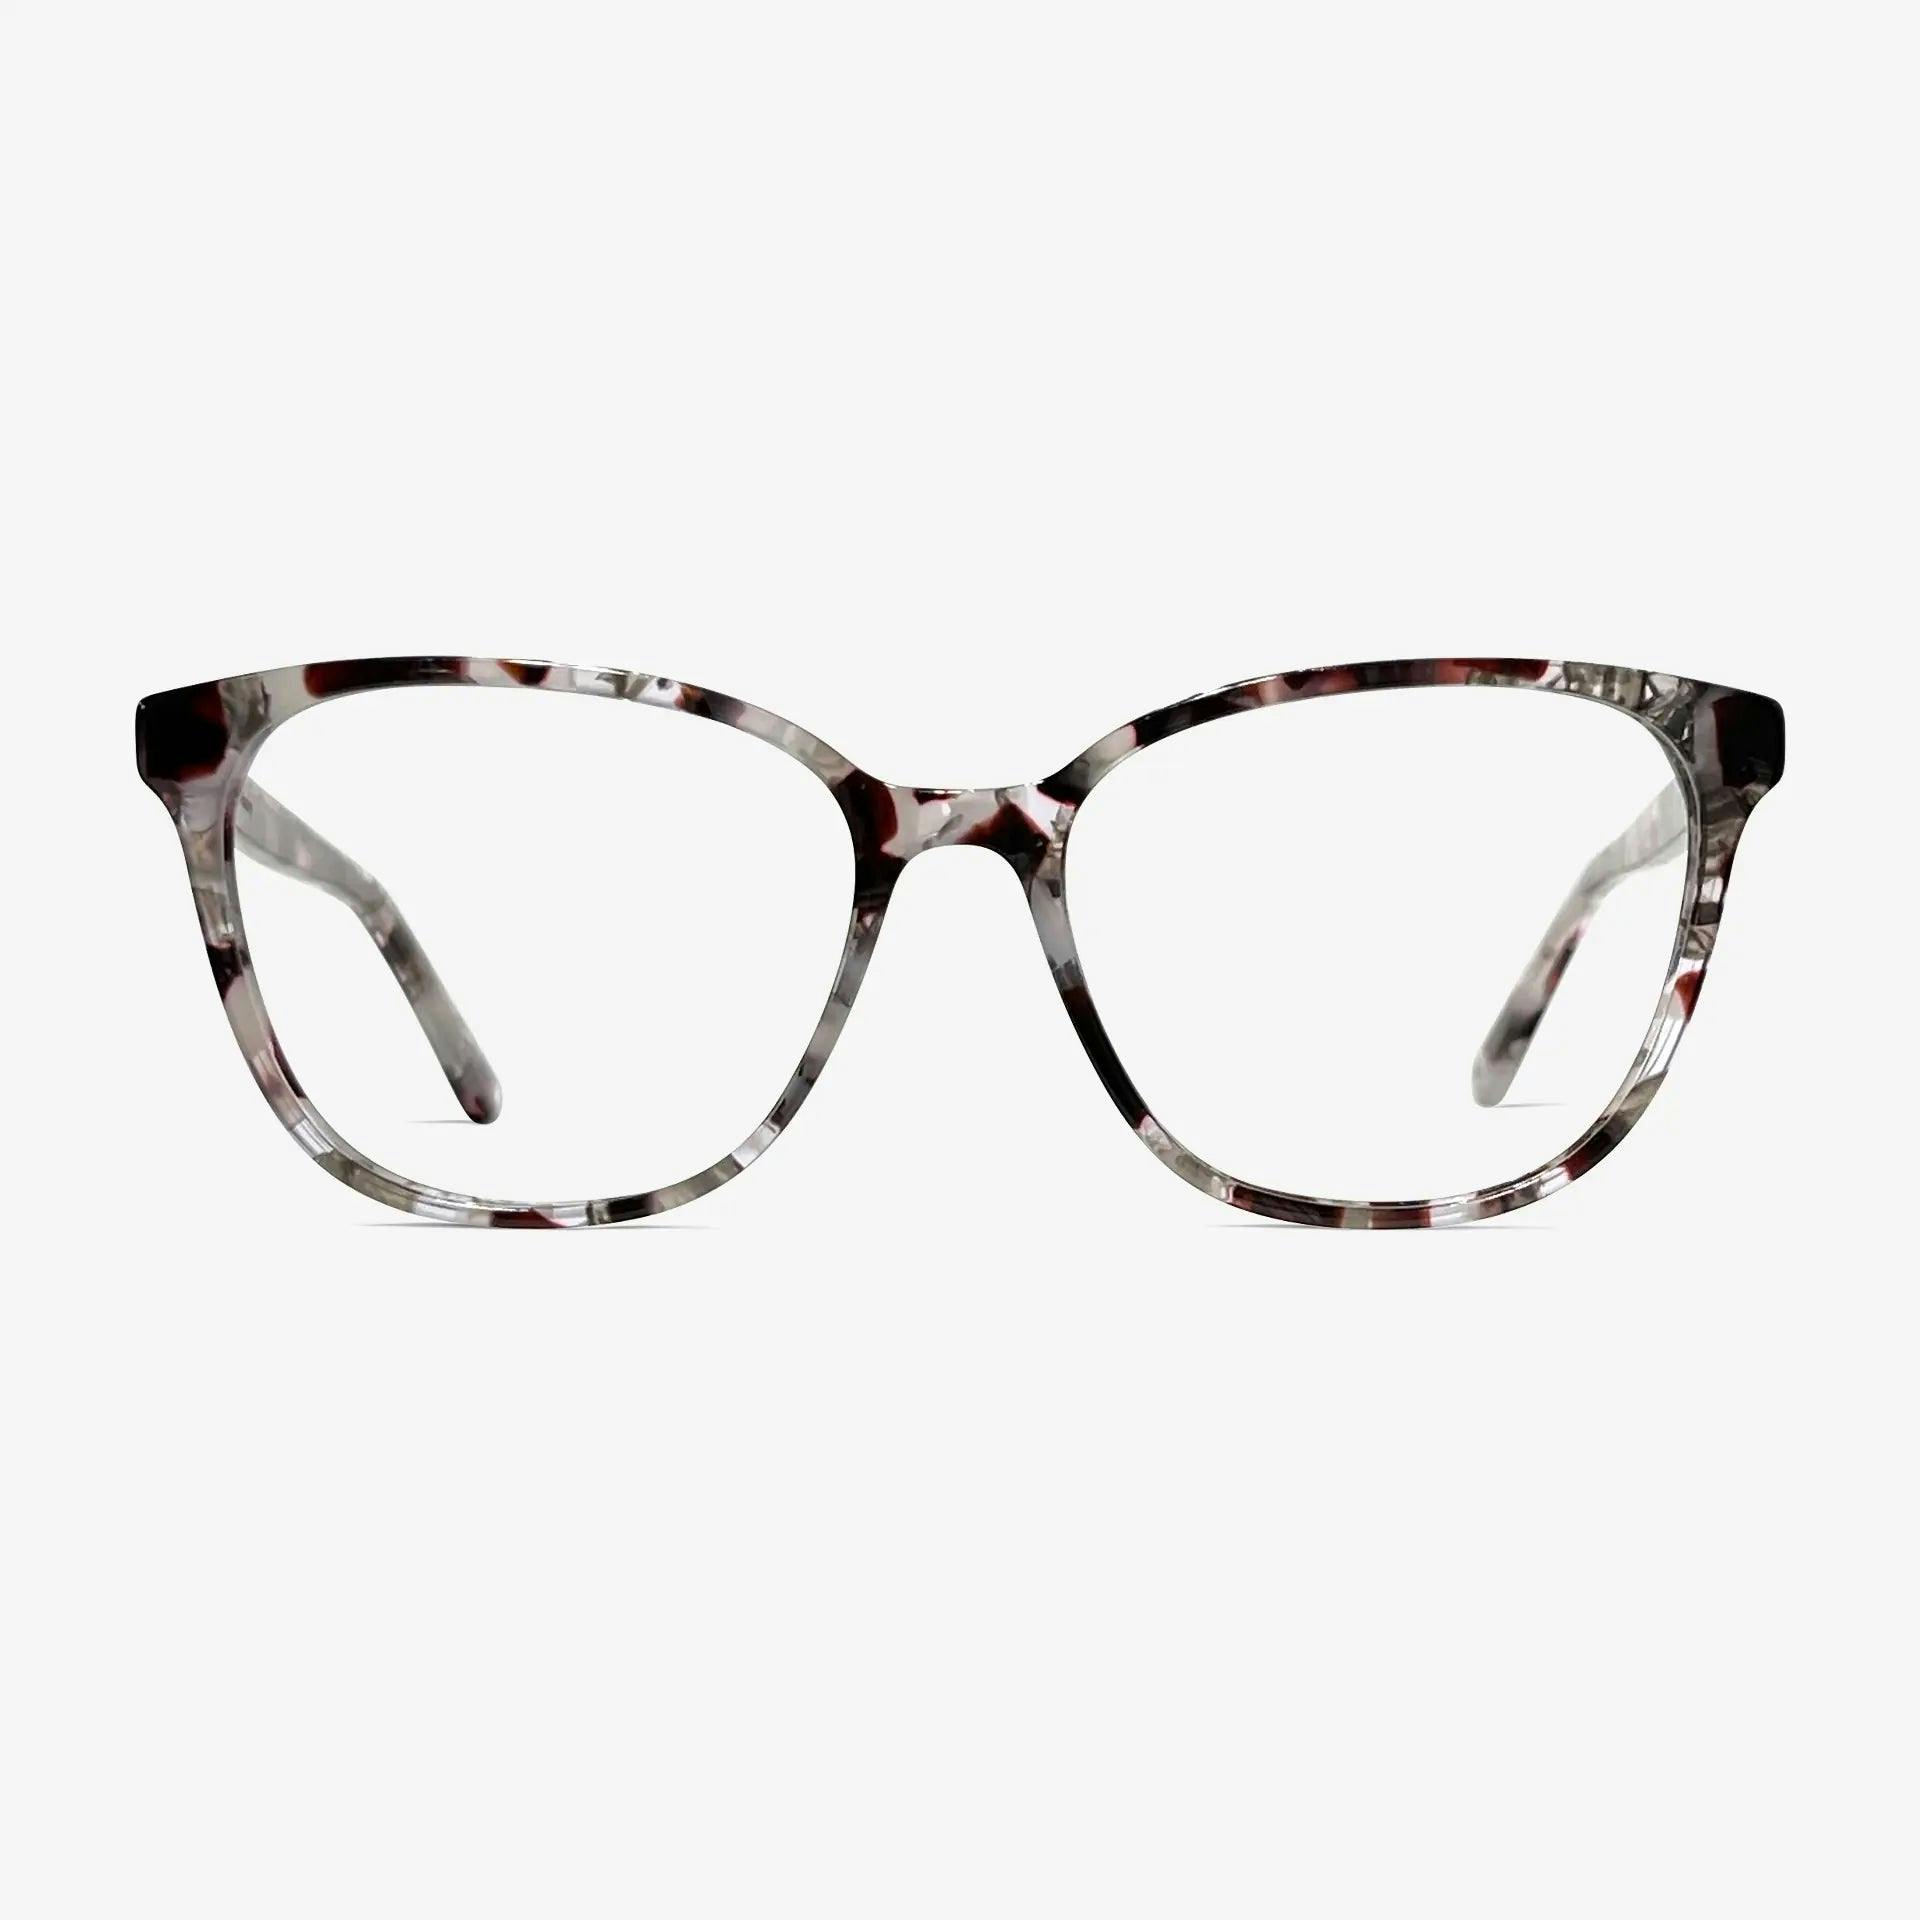 Huxley glasses | Paige Red Tortoise 